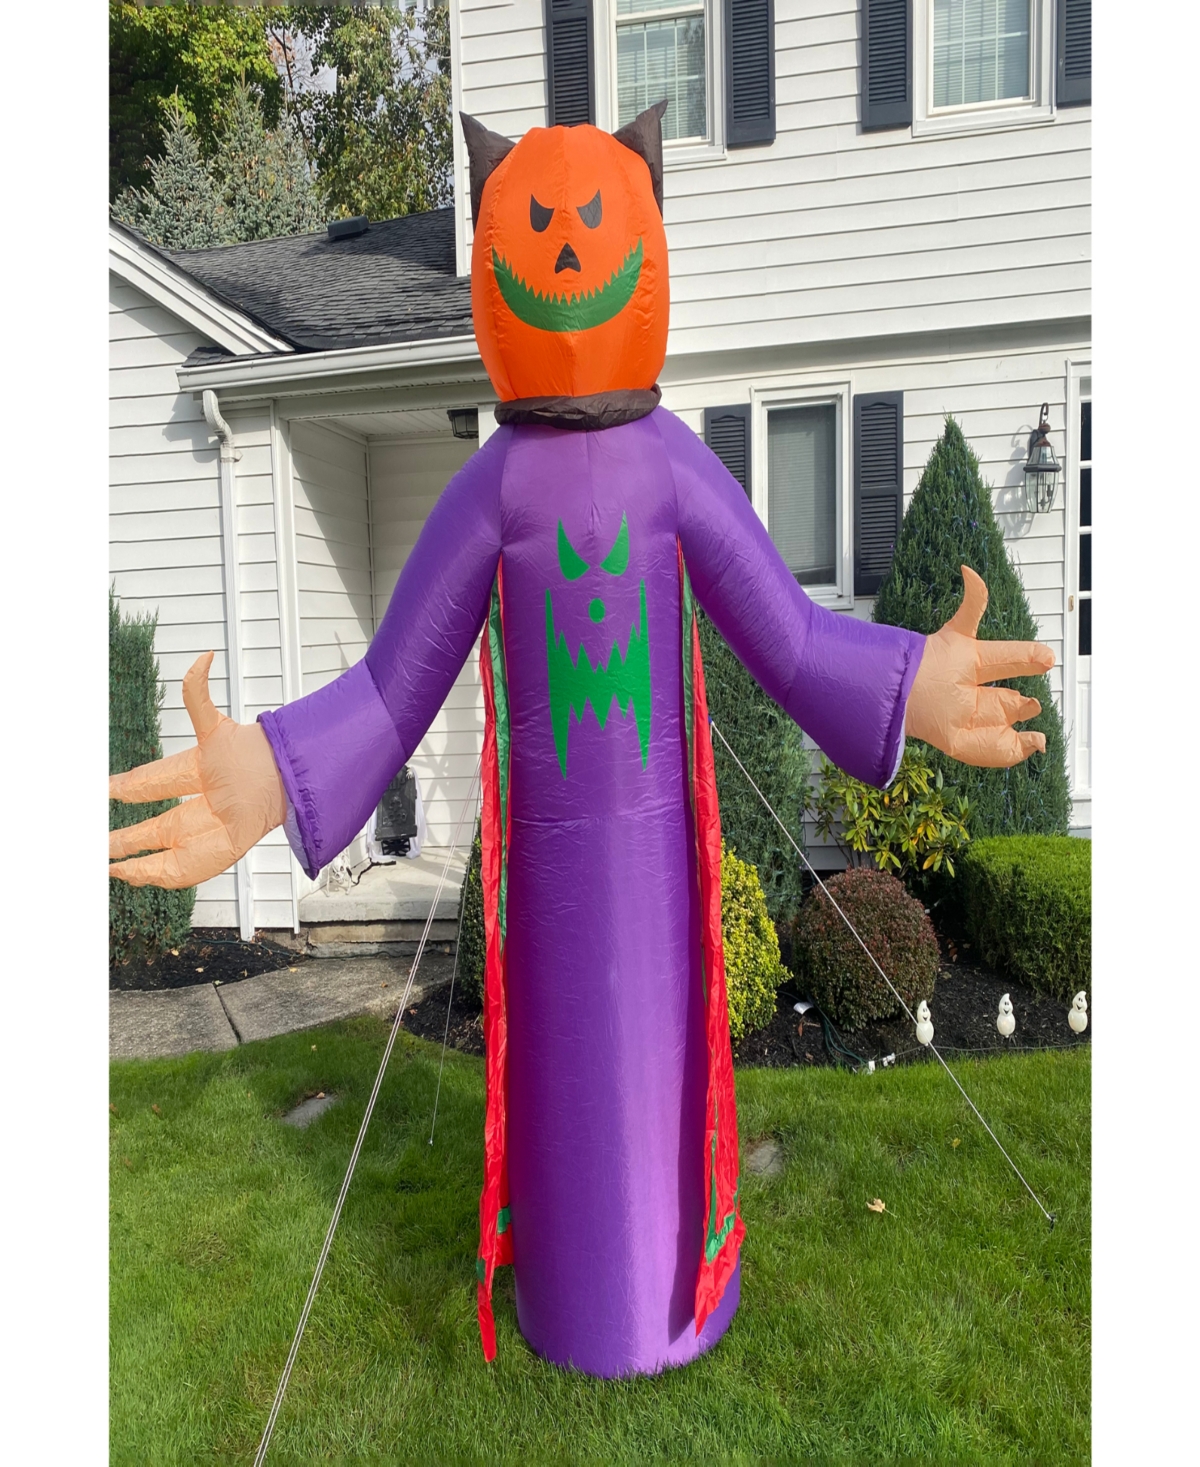 Northlight 8' Lighted Jack-o'-lantern Grim Reaper Inflatable Outdoor Halloween Decoration In Orange